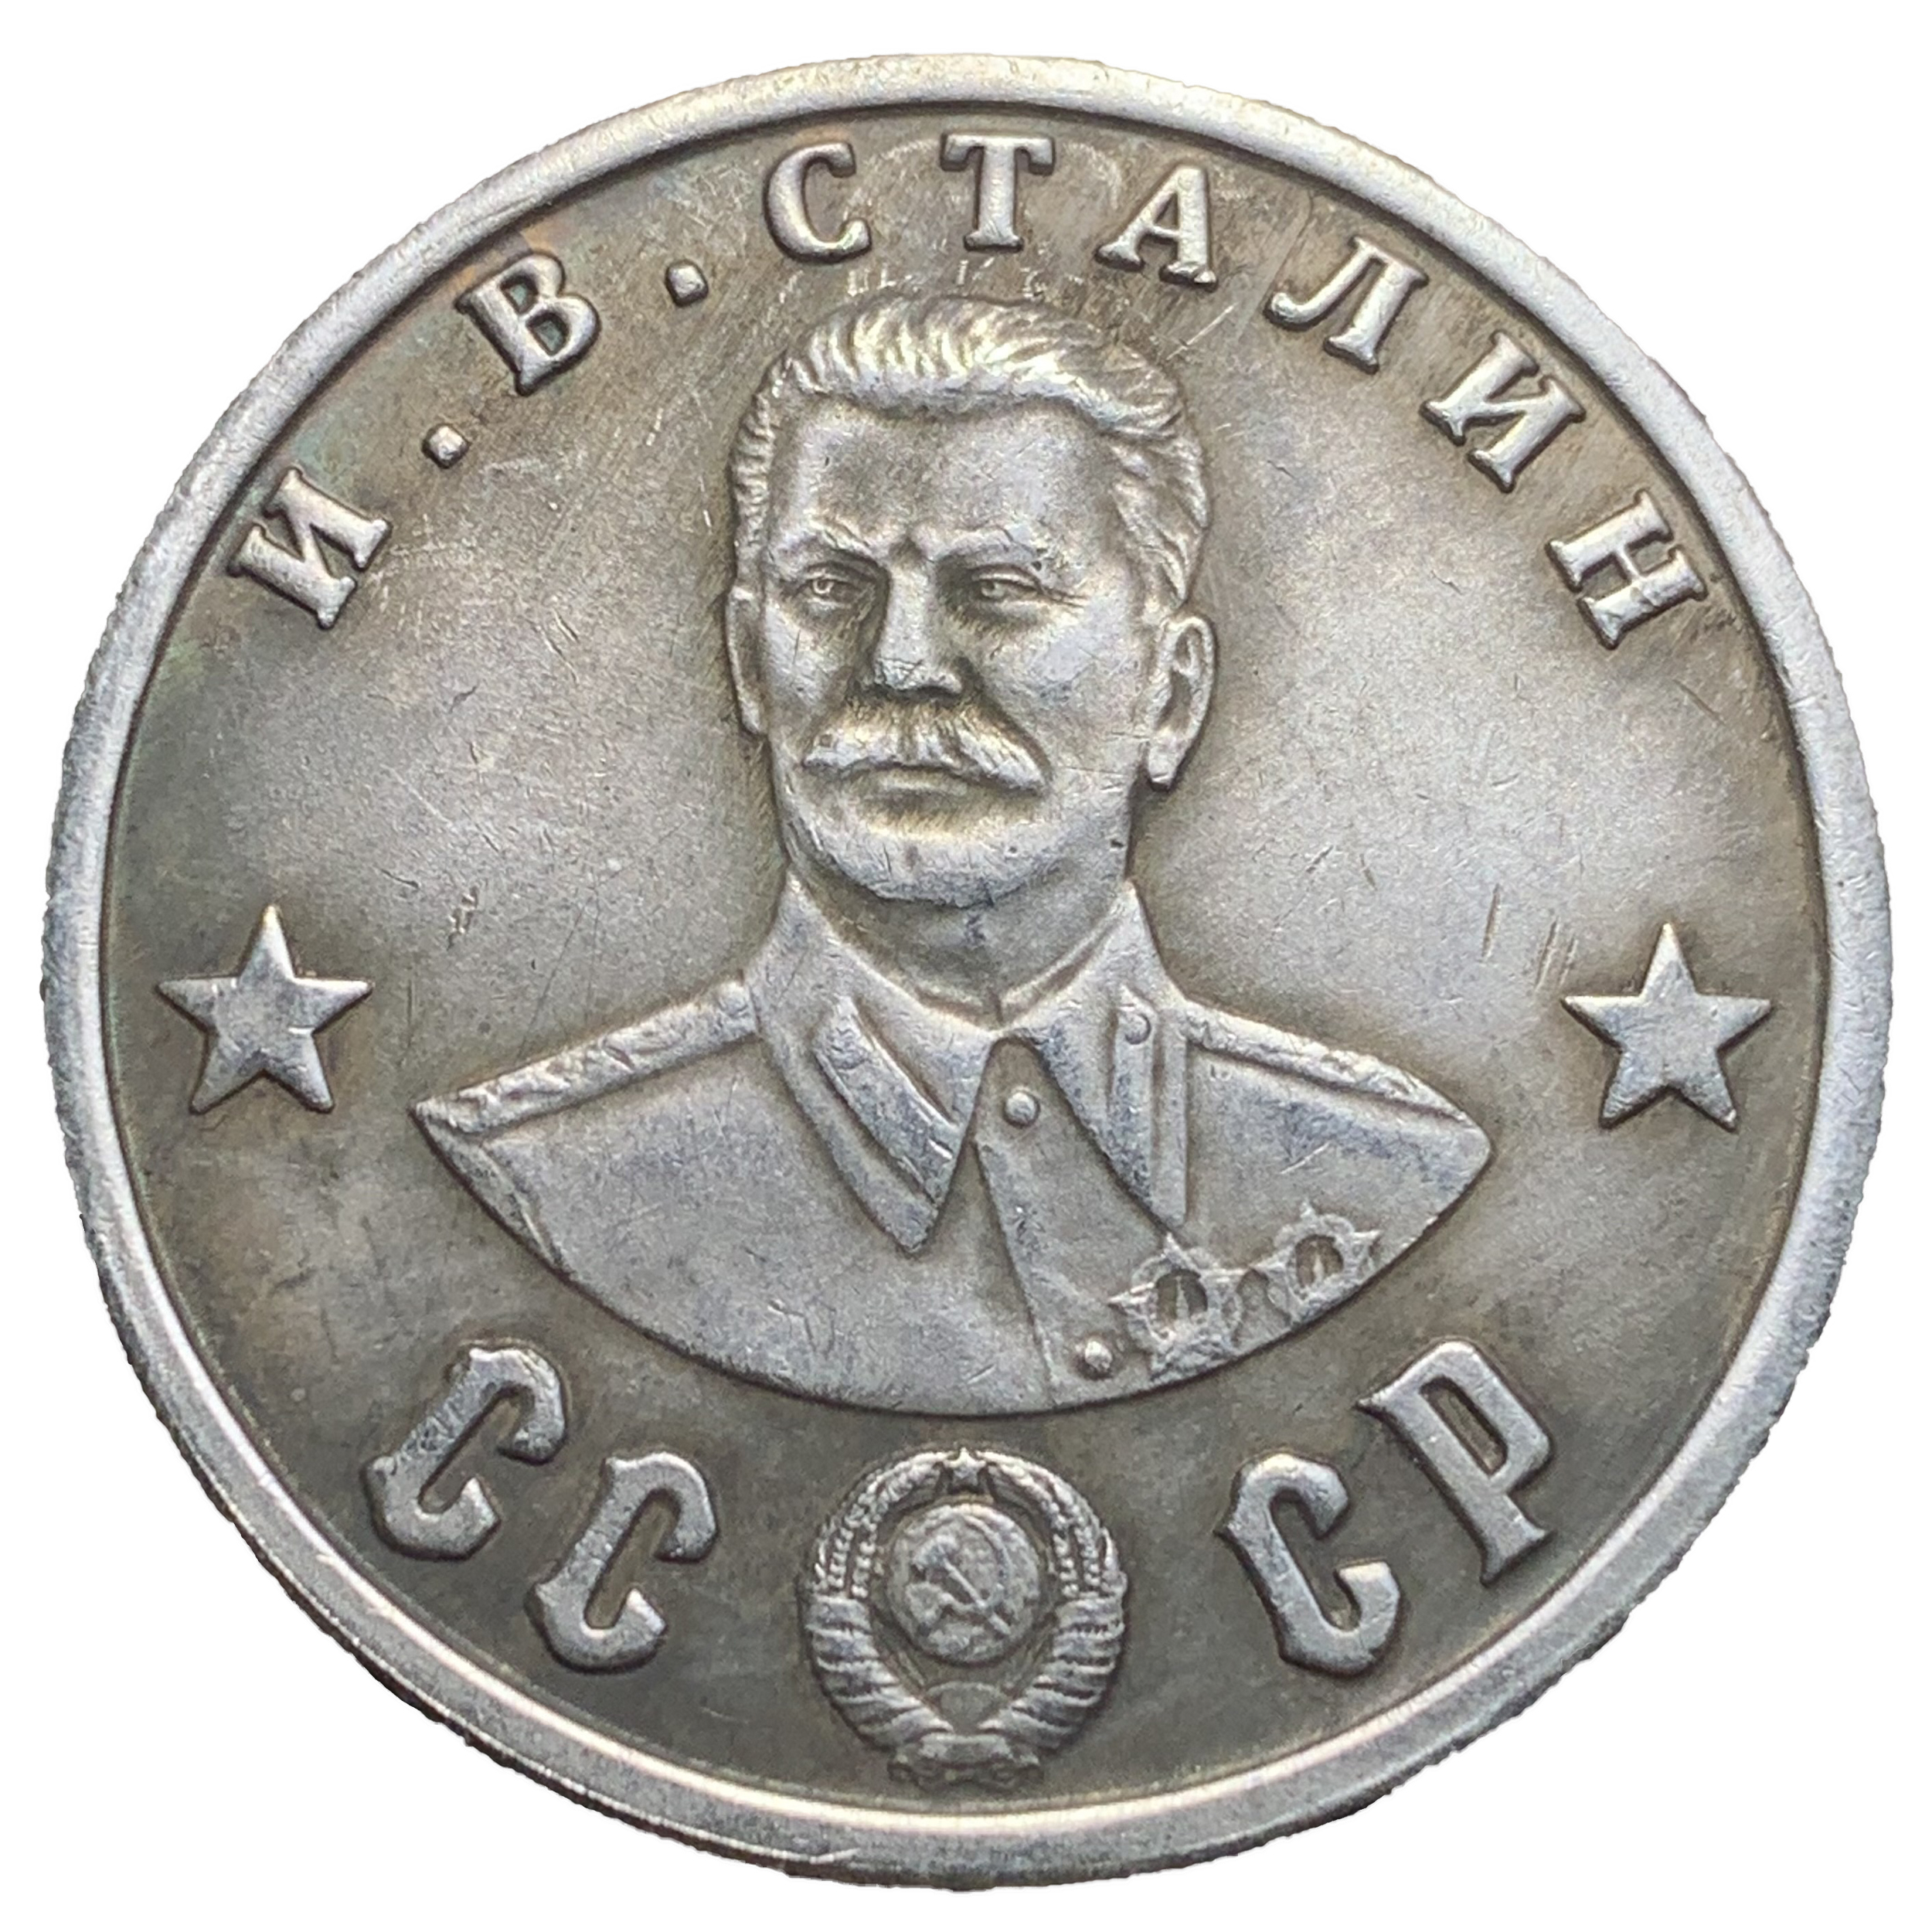 Joseph Stalin 100 Rubles Soviet Union USSR WW2 Exonumia Coin